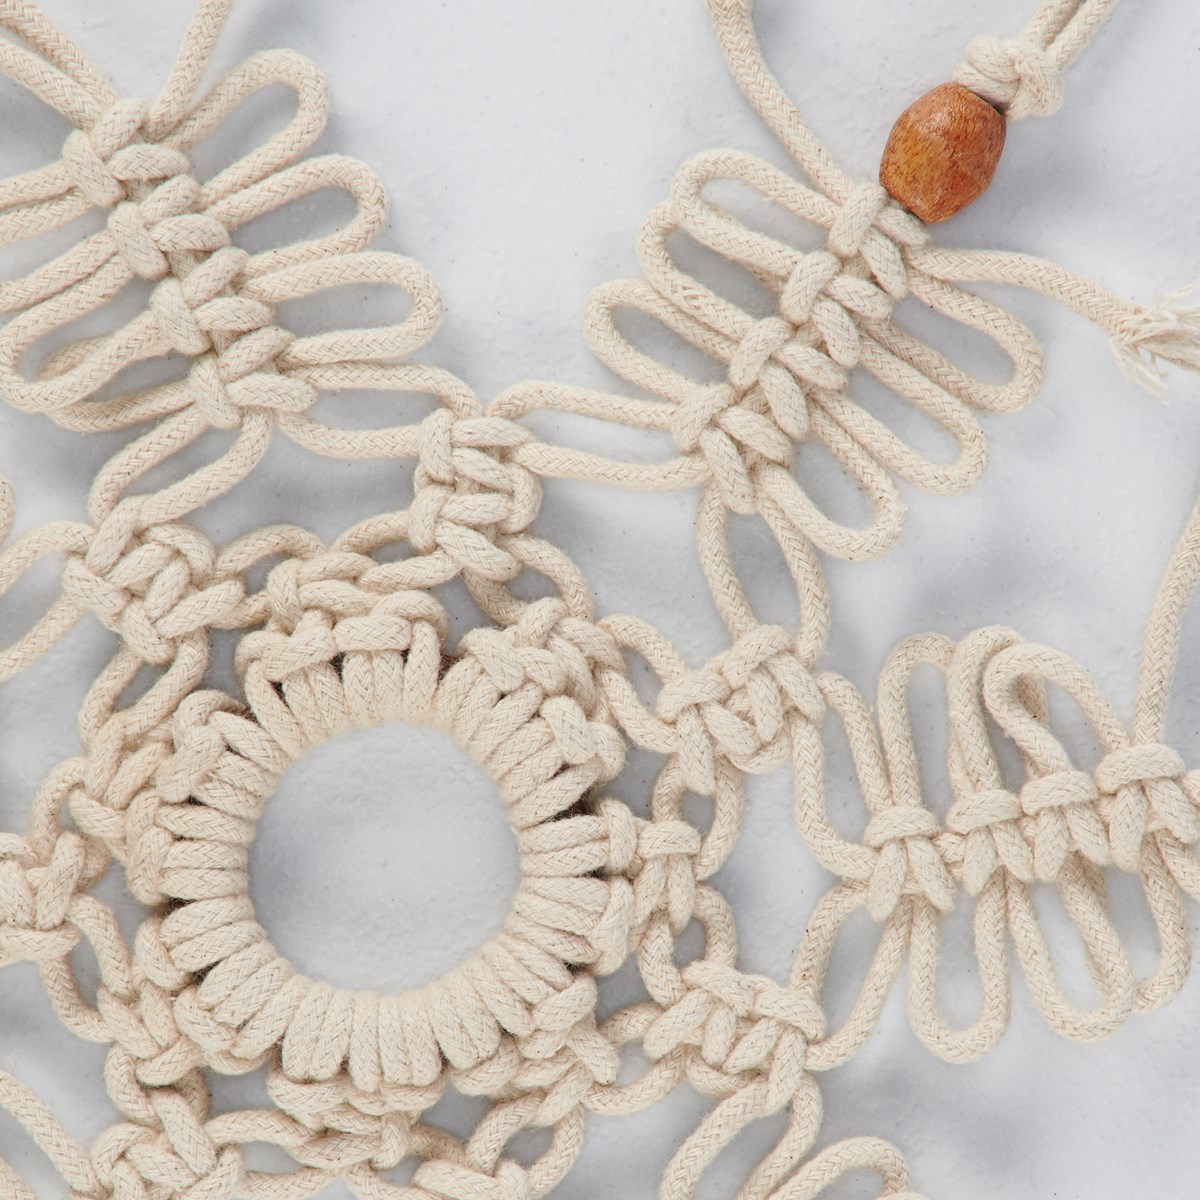 Macrame Snowflake Ornament - Cotton, Polyester, Wood